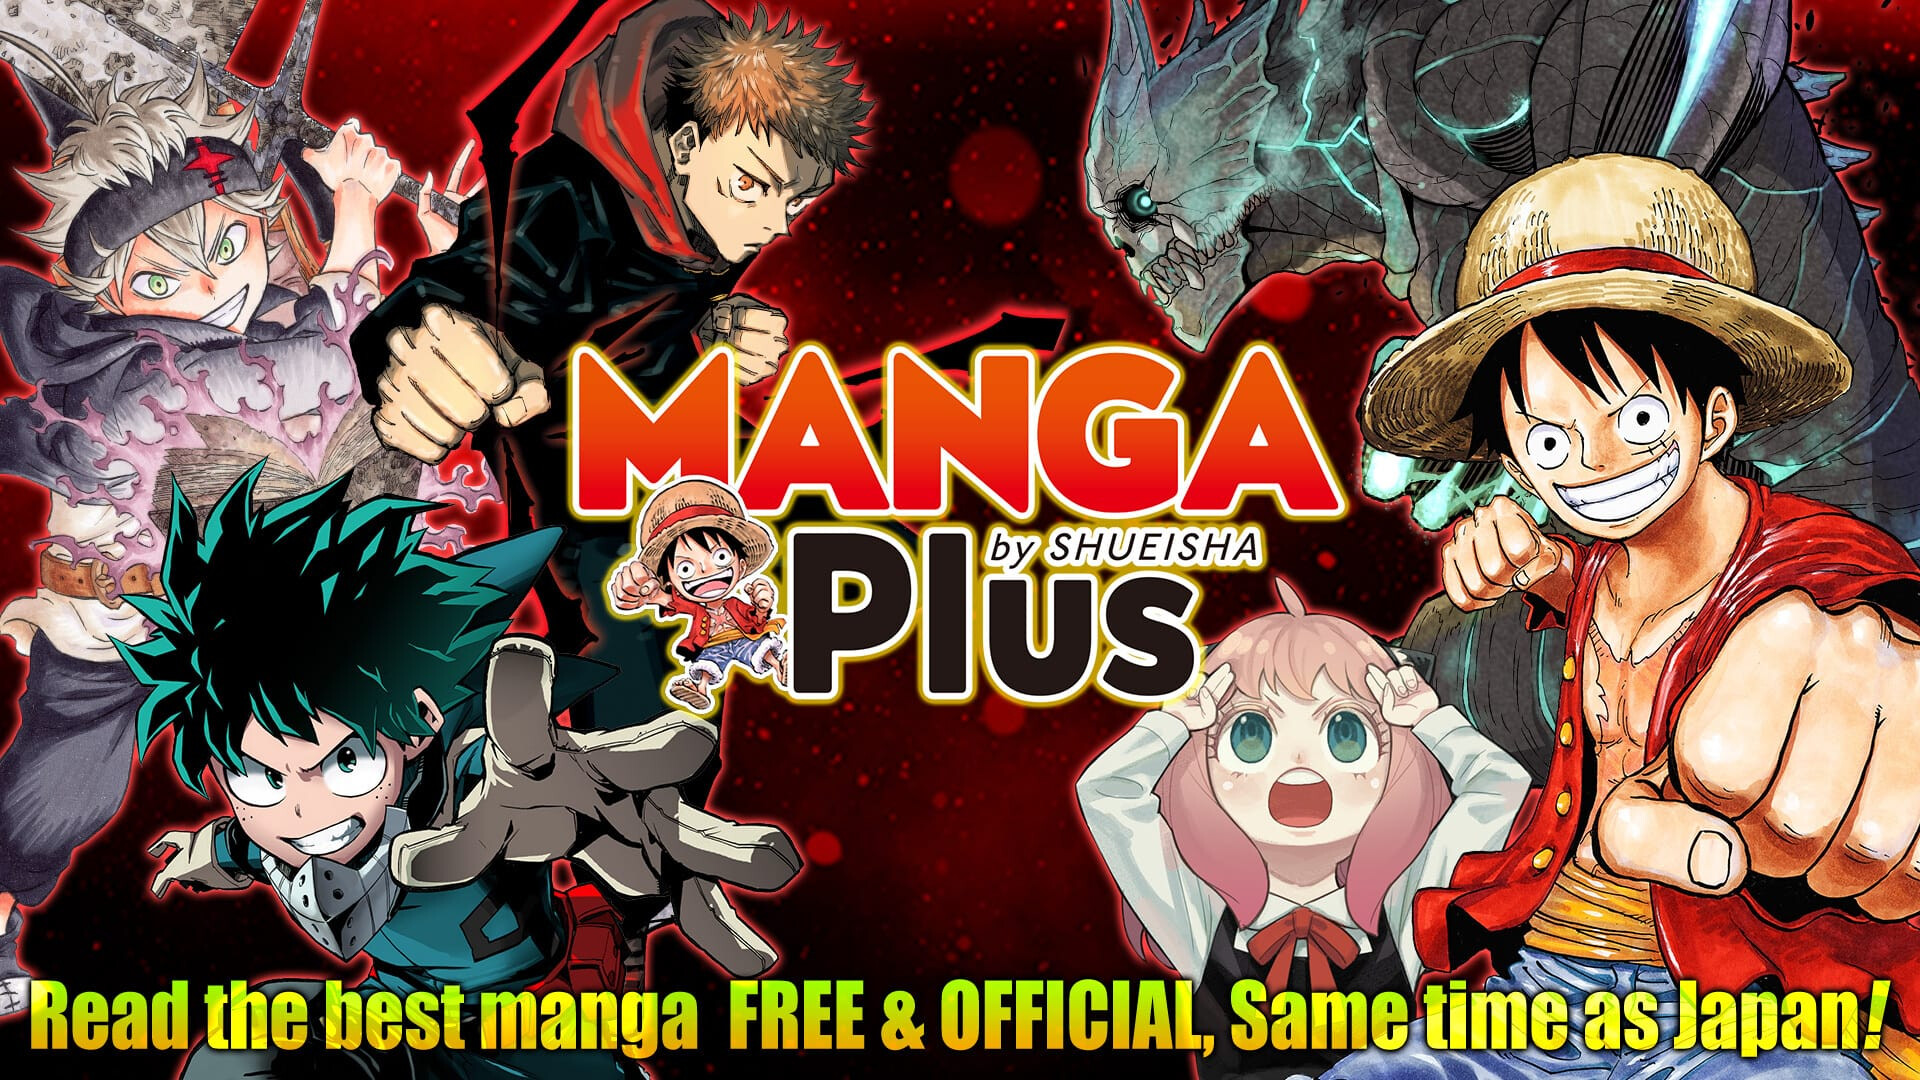 Shueisha Launches Free Global MANGA Plus Service - News - Anime News Network